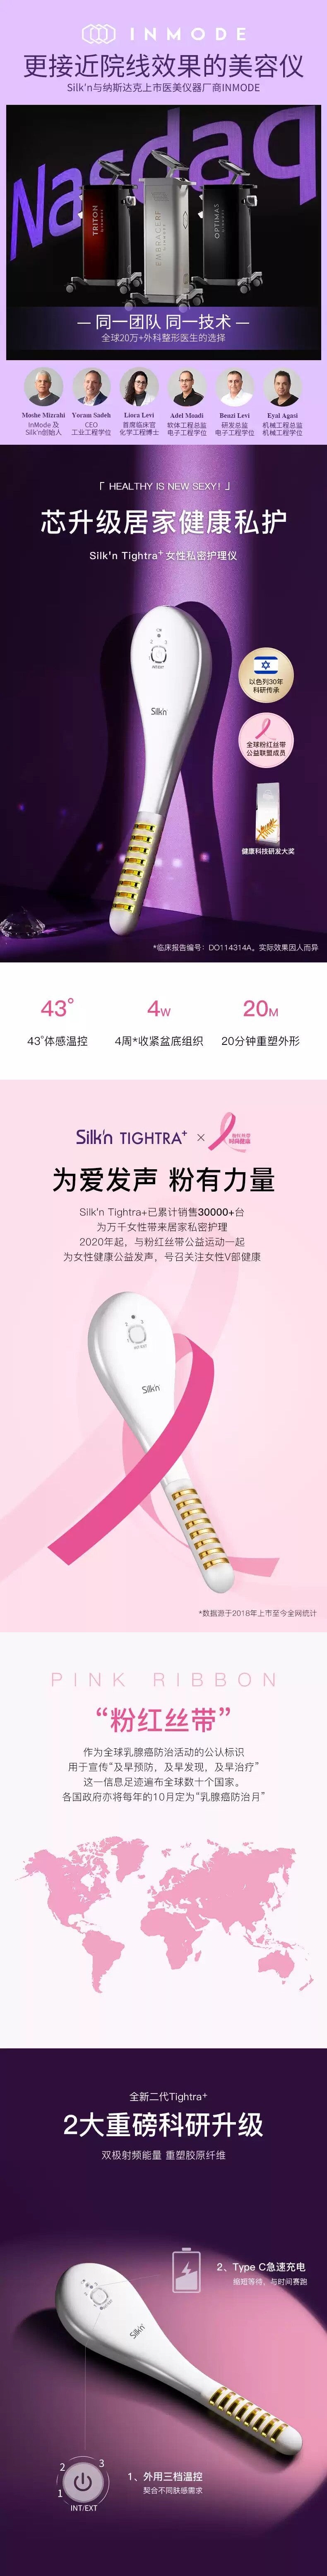 Effective feminine wellness beauty device to solve vaginal laxity 阴道松弛 - Silk'n Tightra 2.0 - BeautyFoo Mall Malaysia